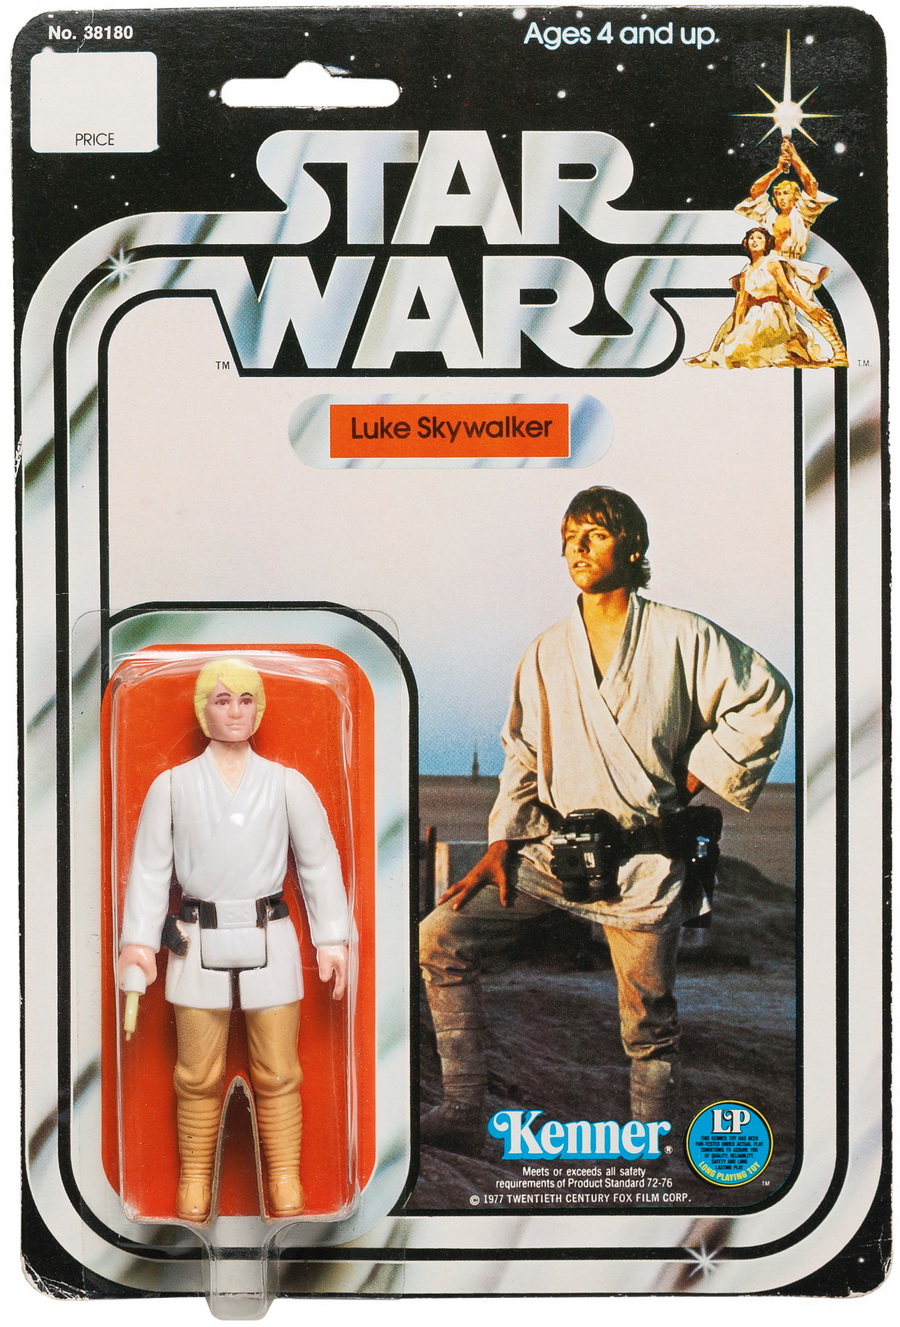 Star Wars Luke Skywalker Personnages Film Action Nouveau personnage jouet collecter RARE 